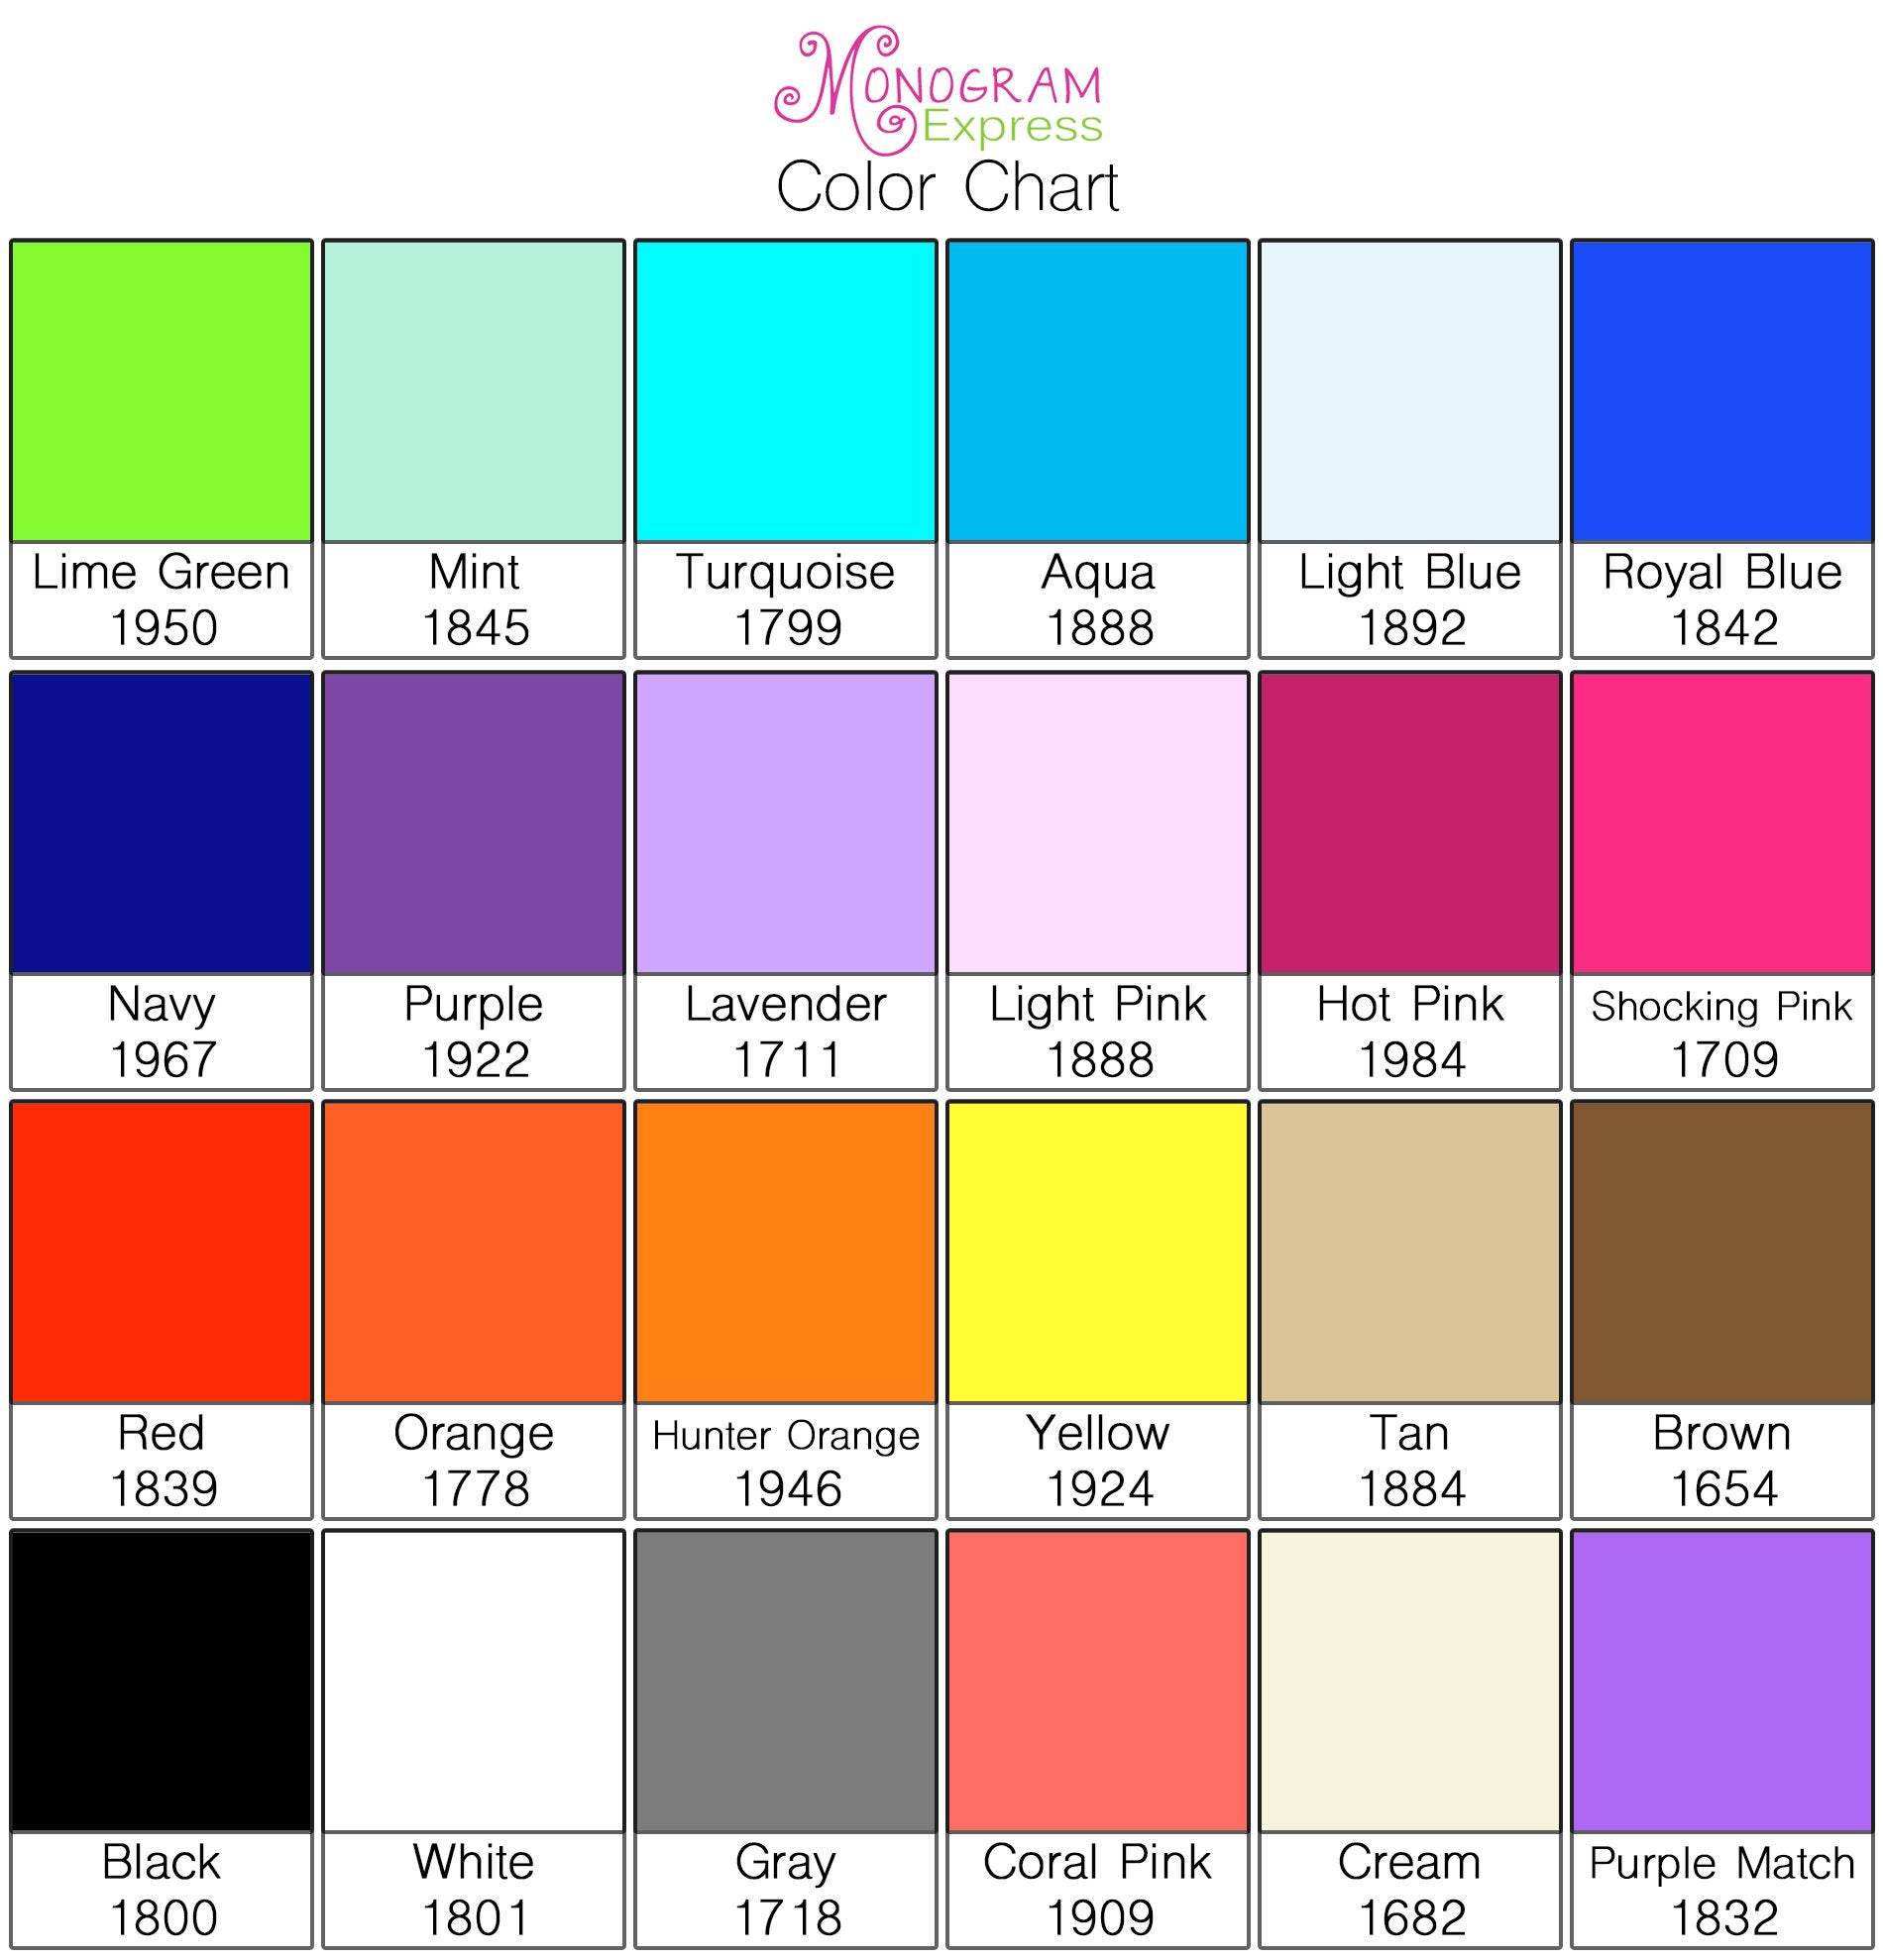 Softex Color Chart